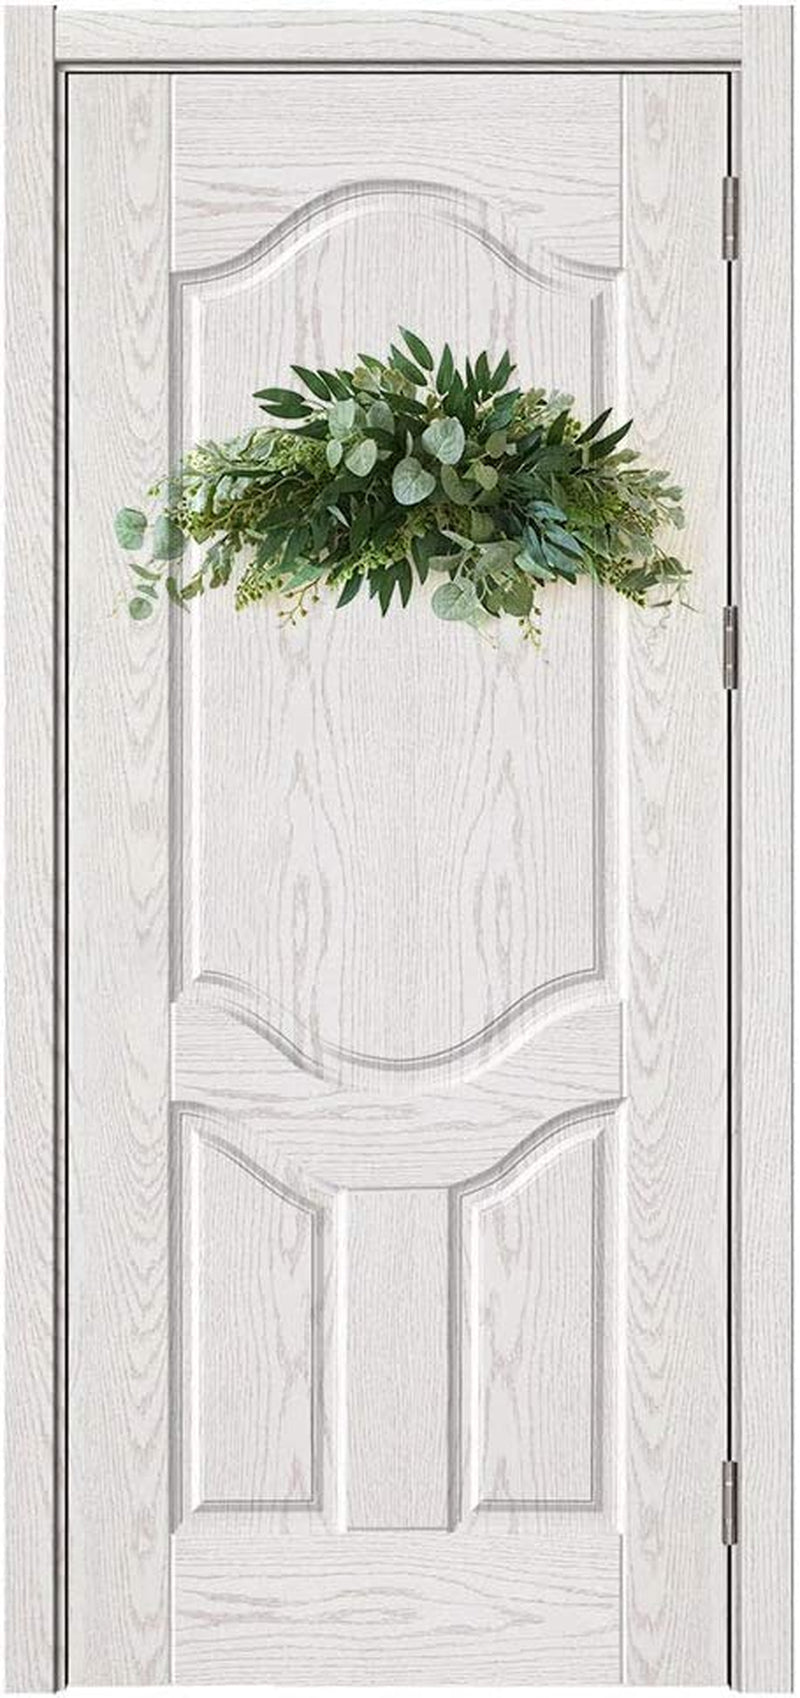 276 Greenery Swag - Artificial Eucalyptus Garland for Home Decor and Weddings